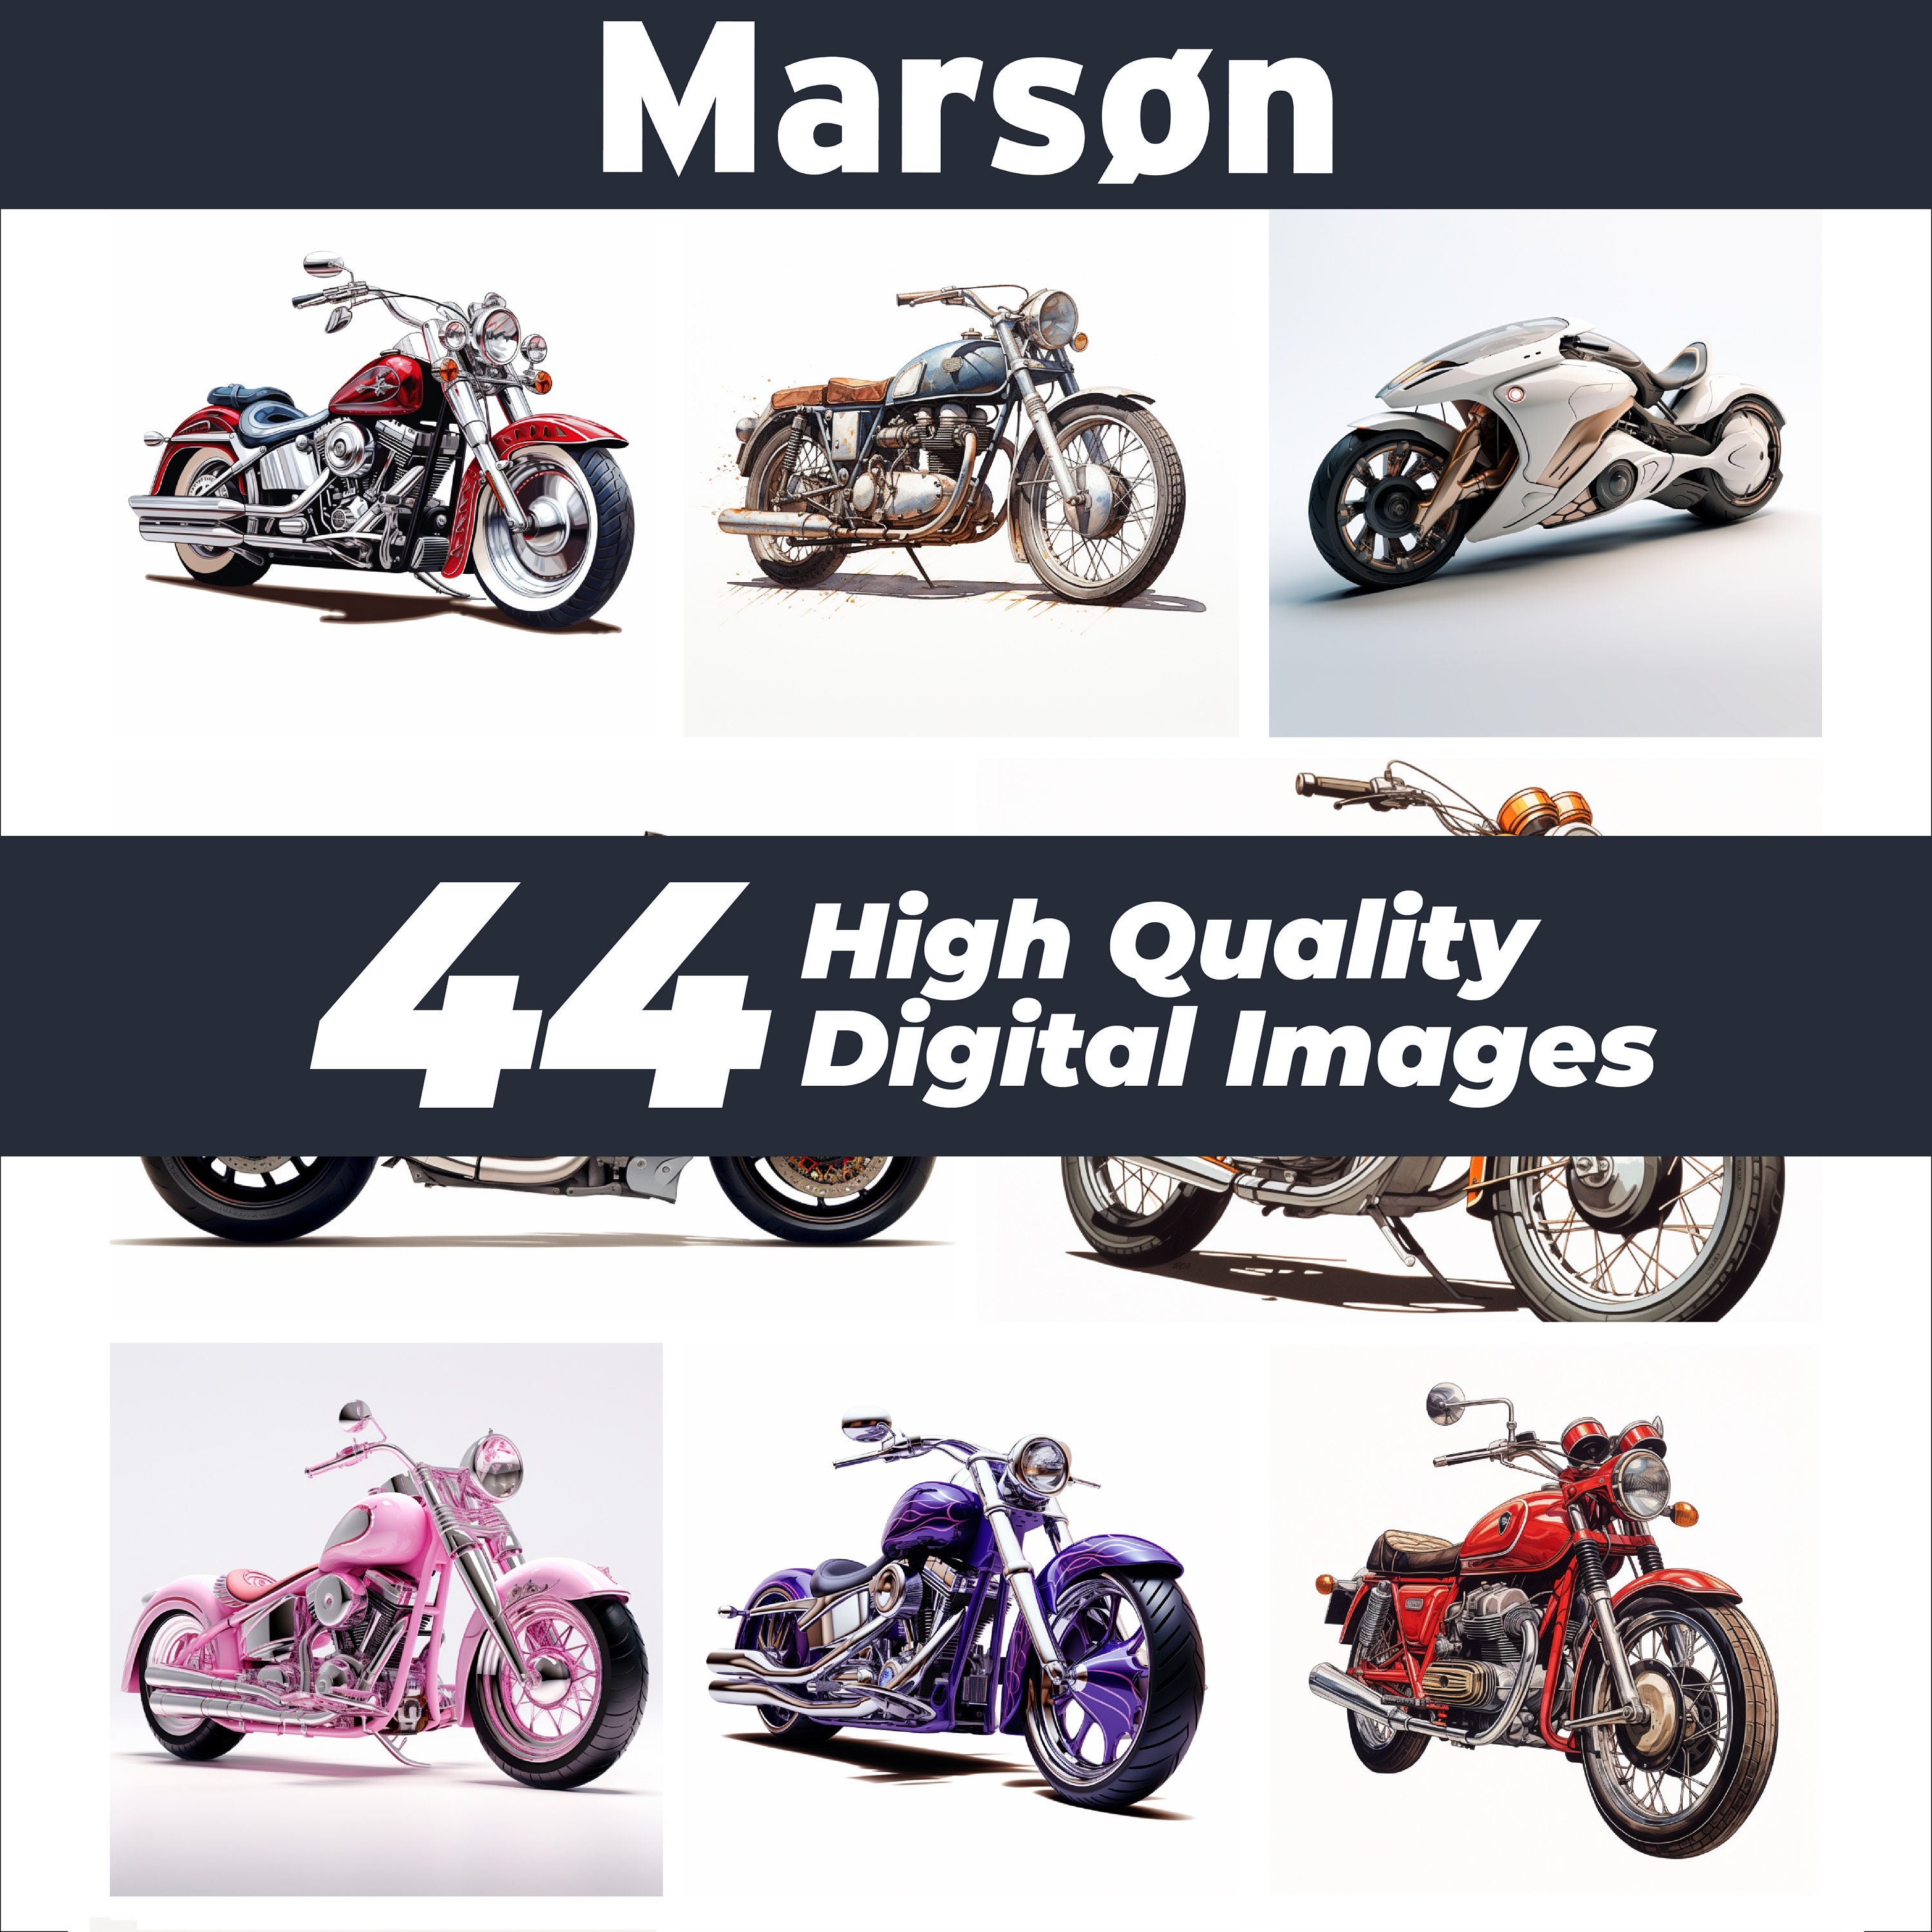 Harley Davidson Scrapbooking Paper 12 x 12 Overlay Transparency Embossed  Metal